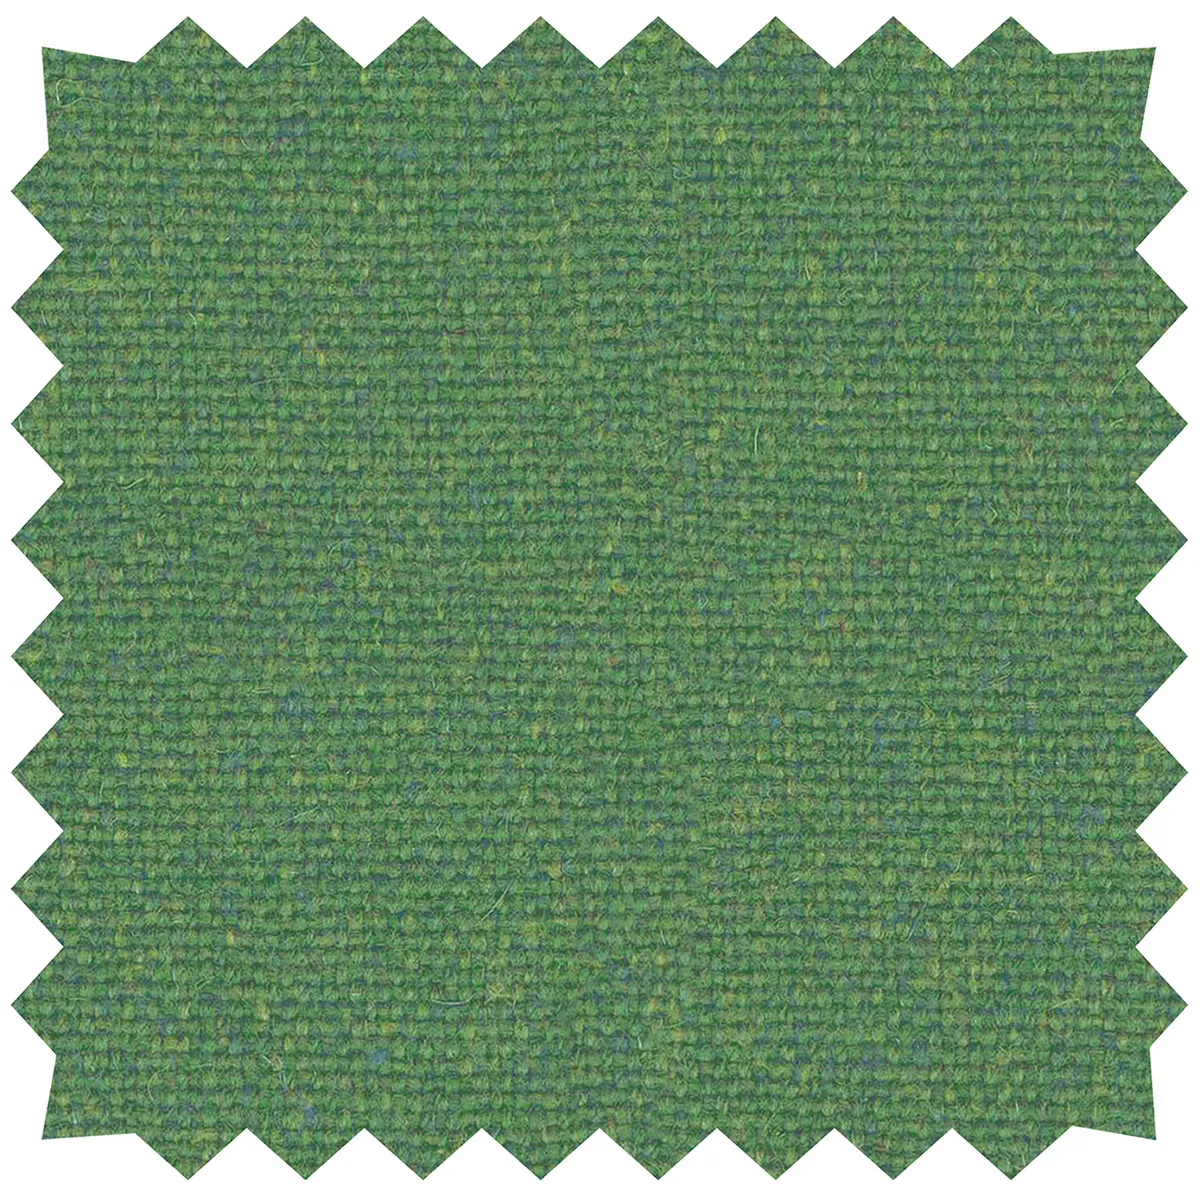 ; Flax curtain fabric in Evergreen, £39 per m, Stitched